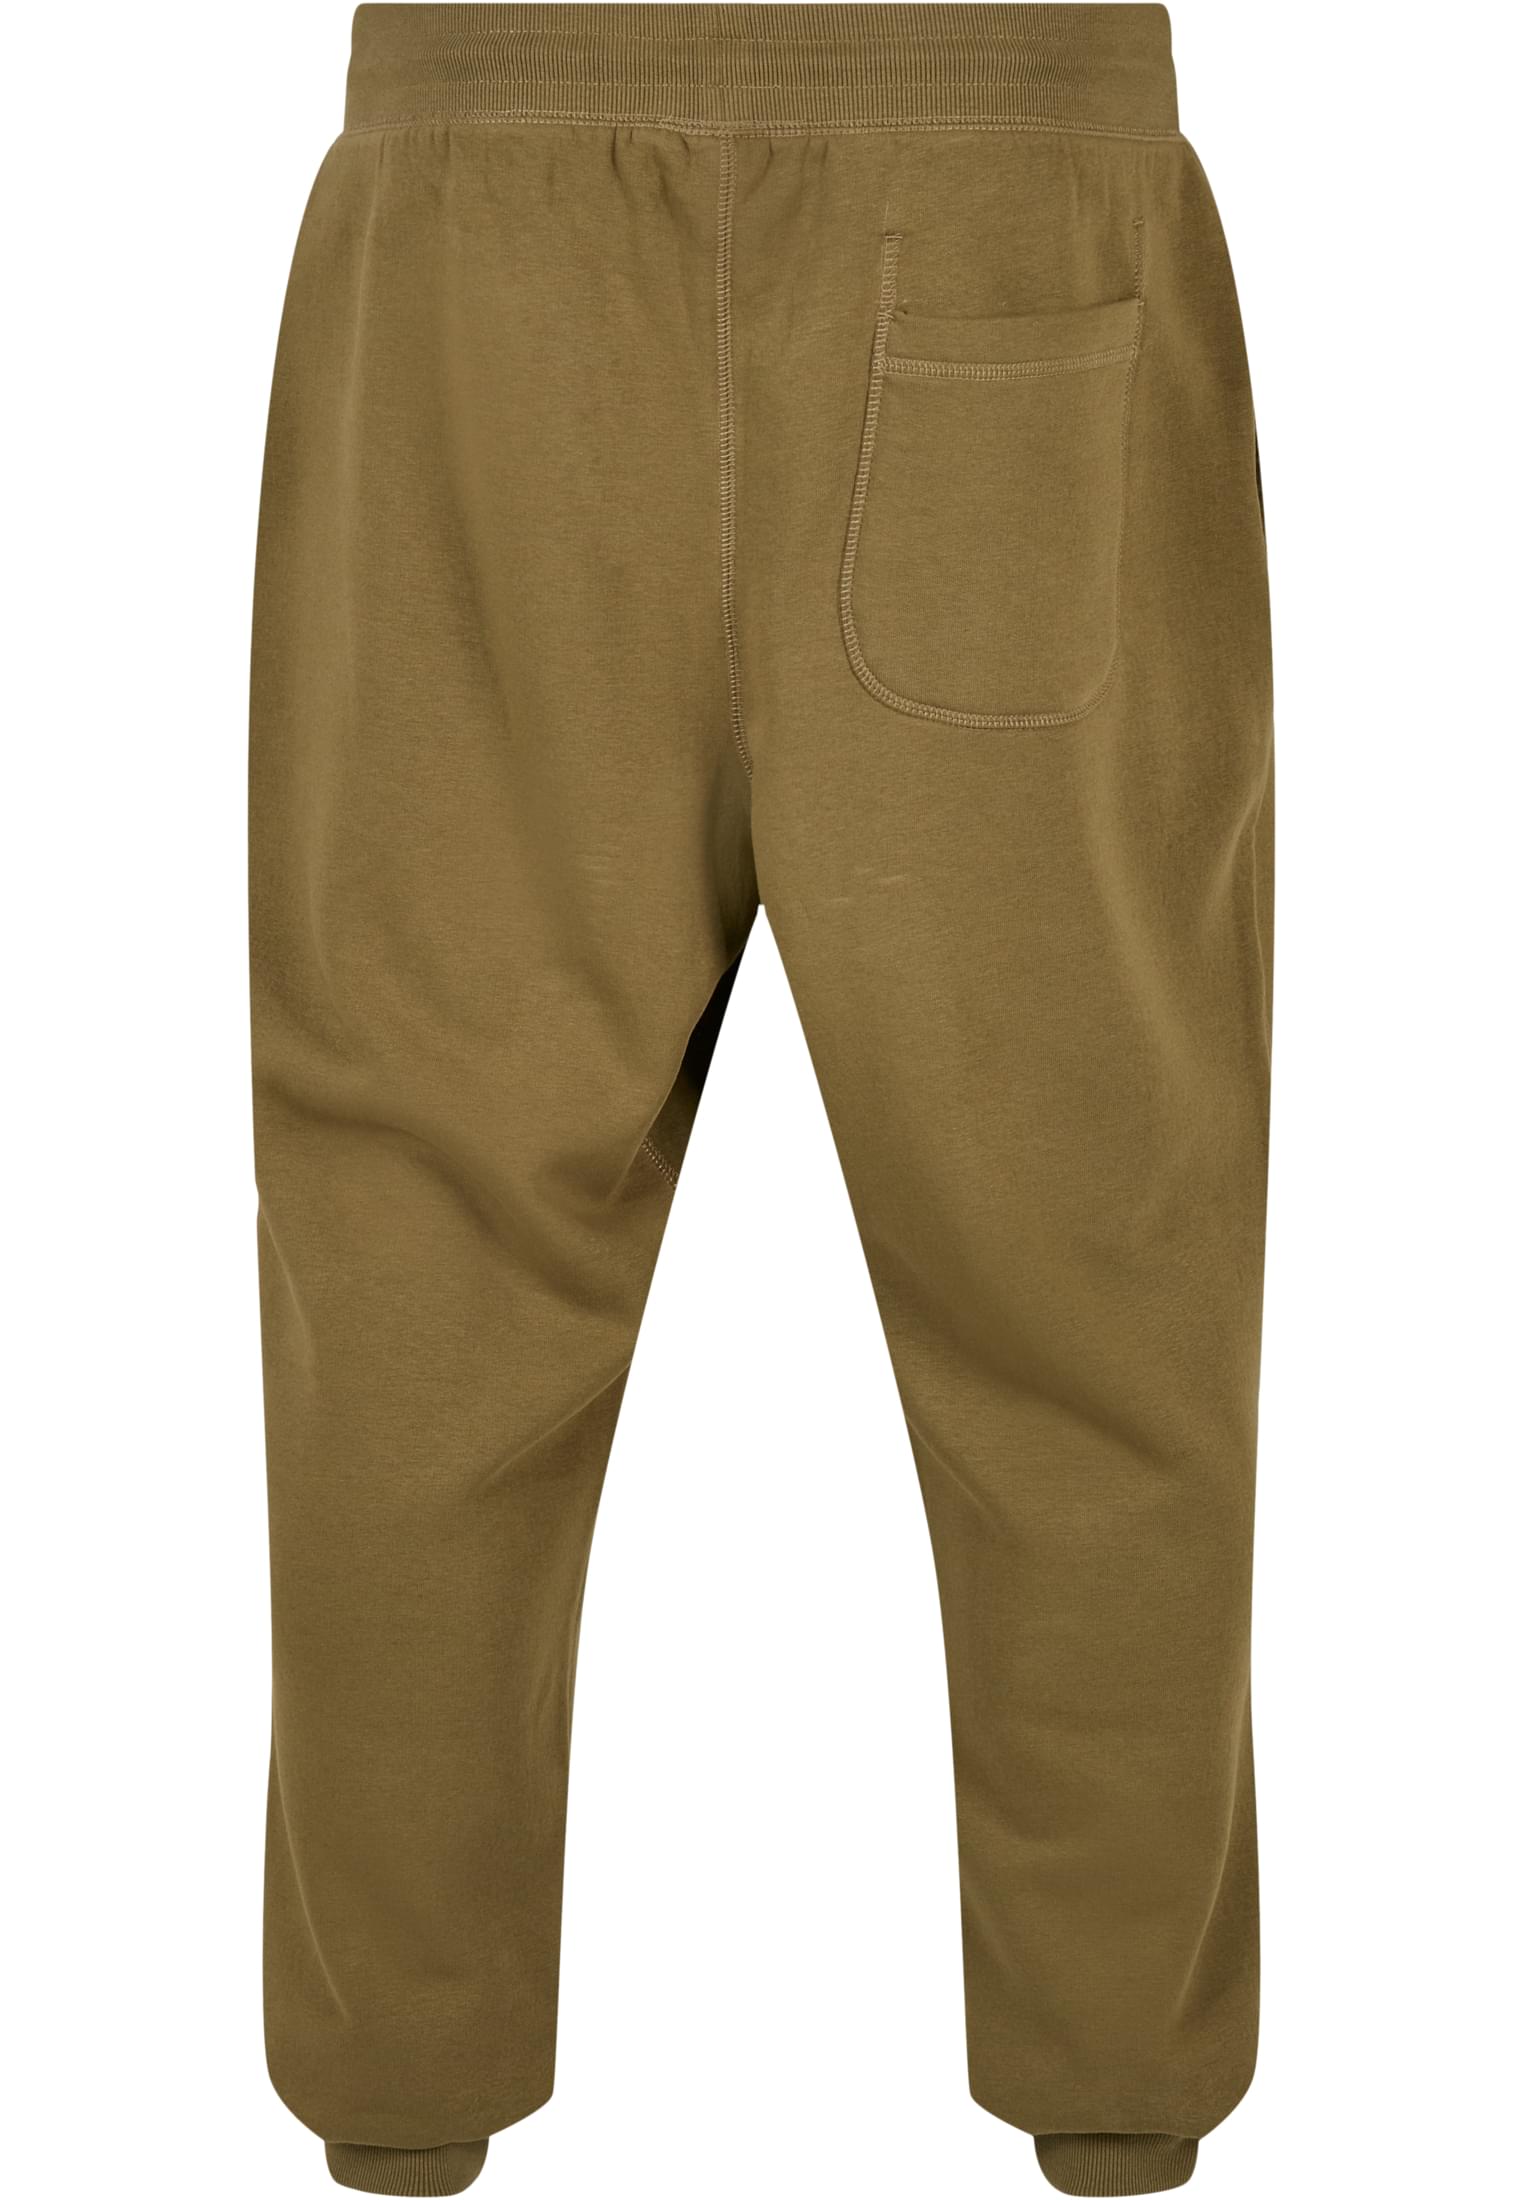 Herren Basic Sweatpants in Farbe tiniolive